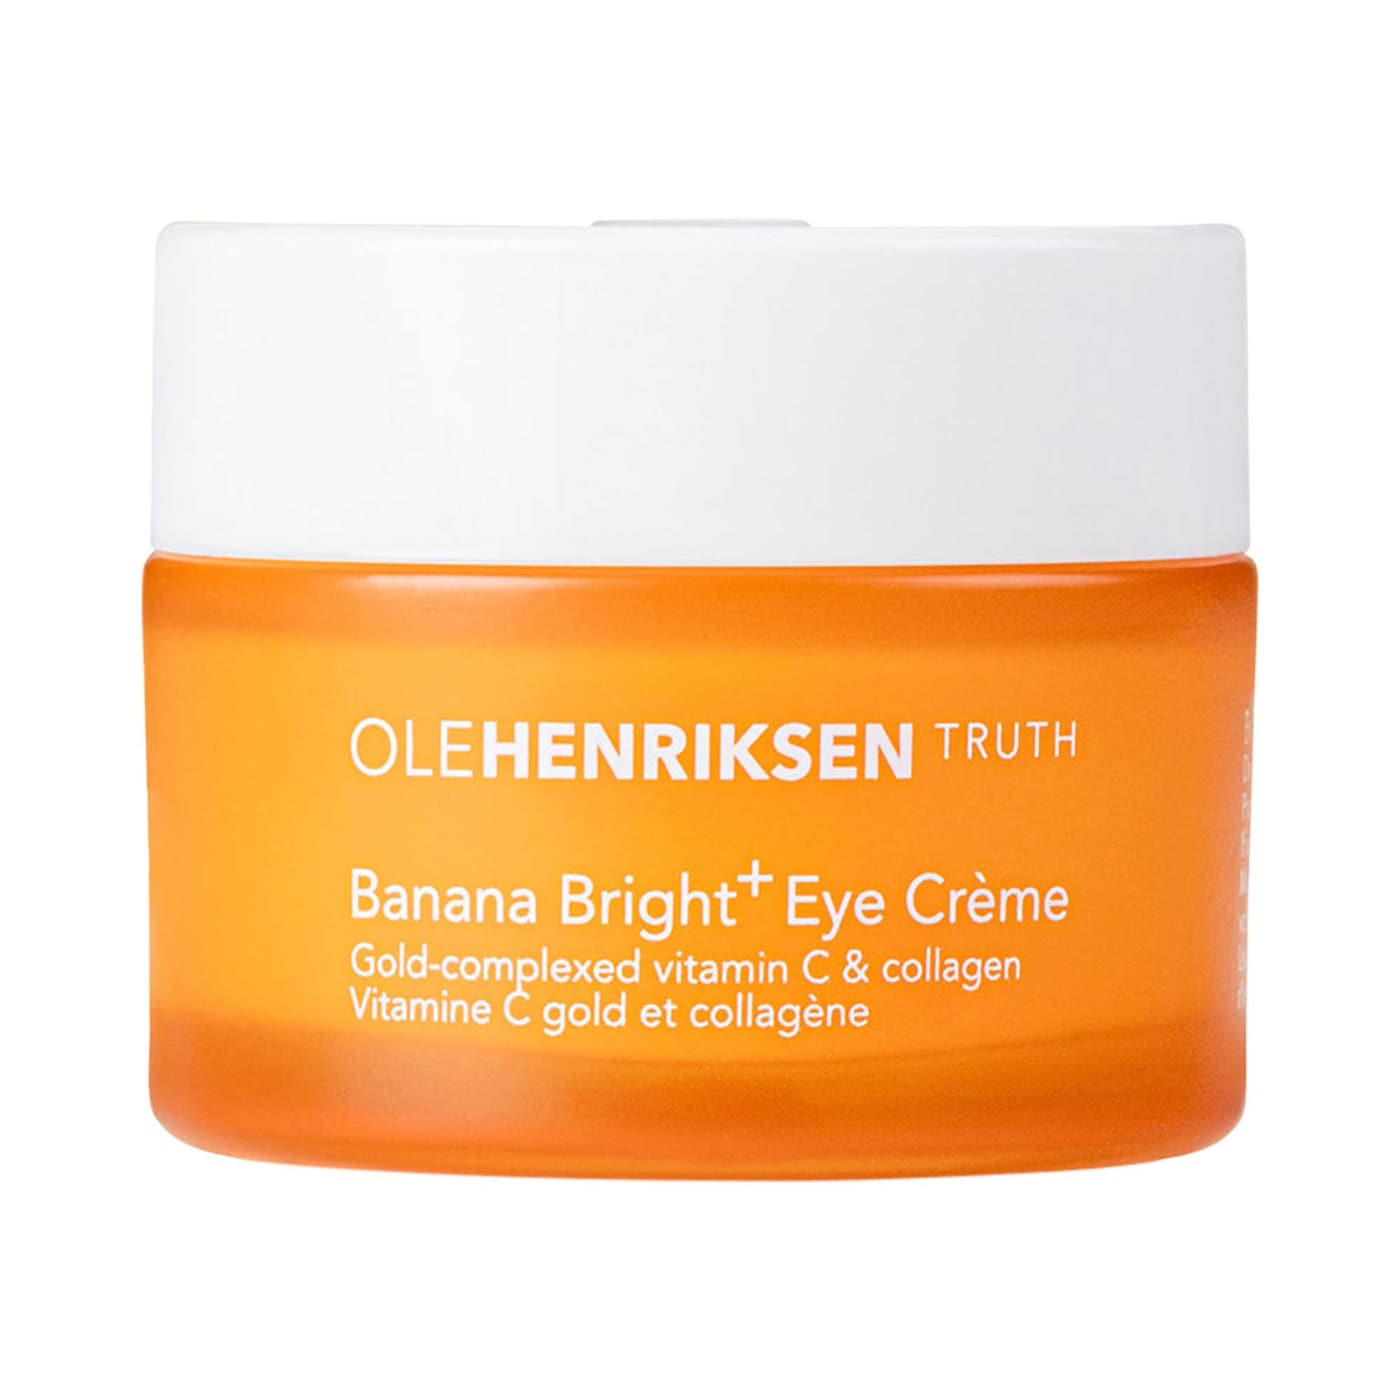 Olehenriksen just upgraded their Banana Bright+ Eye Crème formula, an, banana bright eye cream